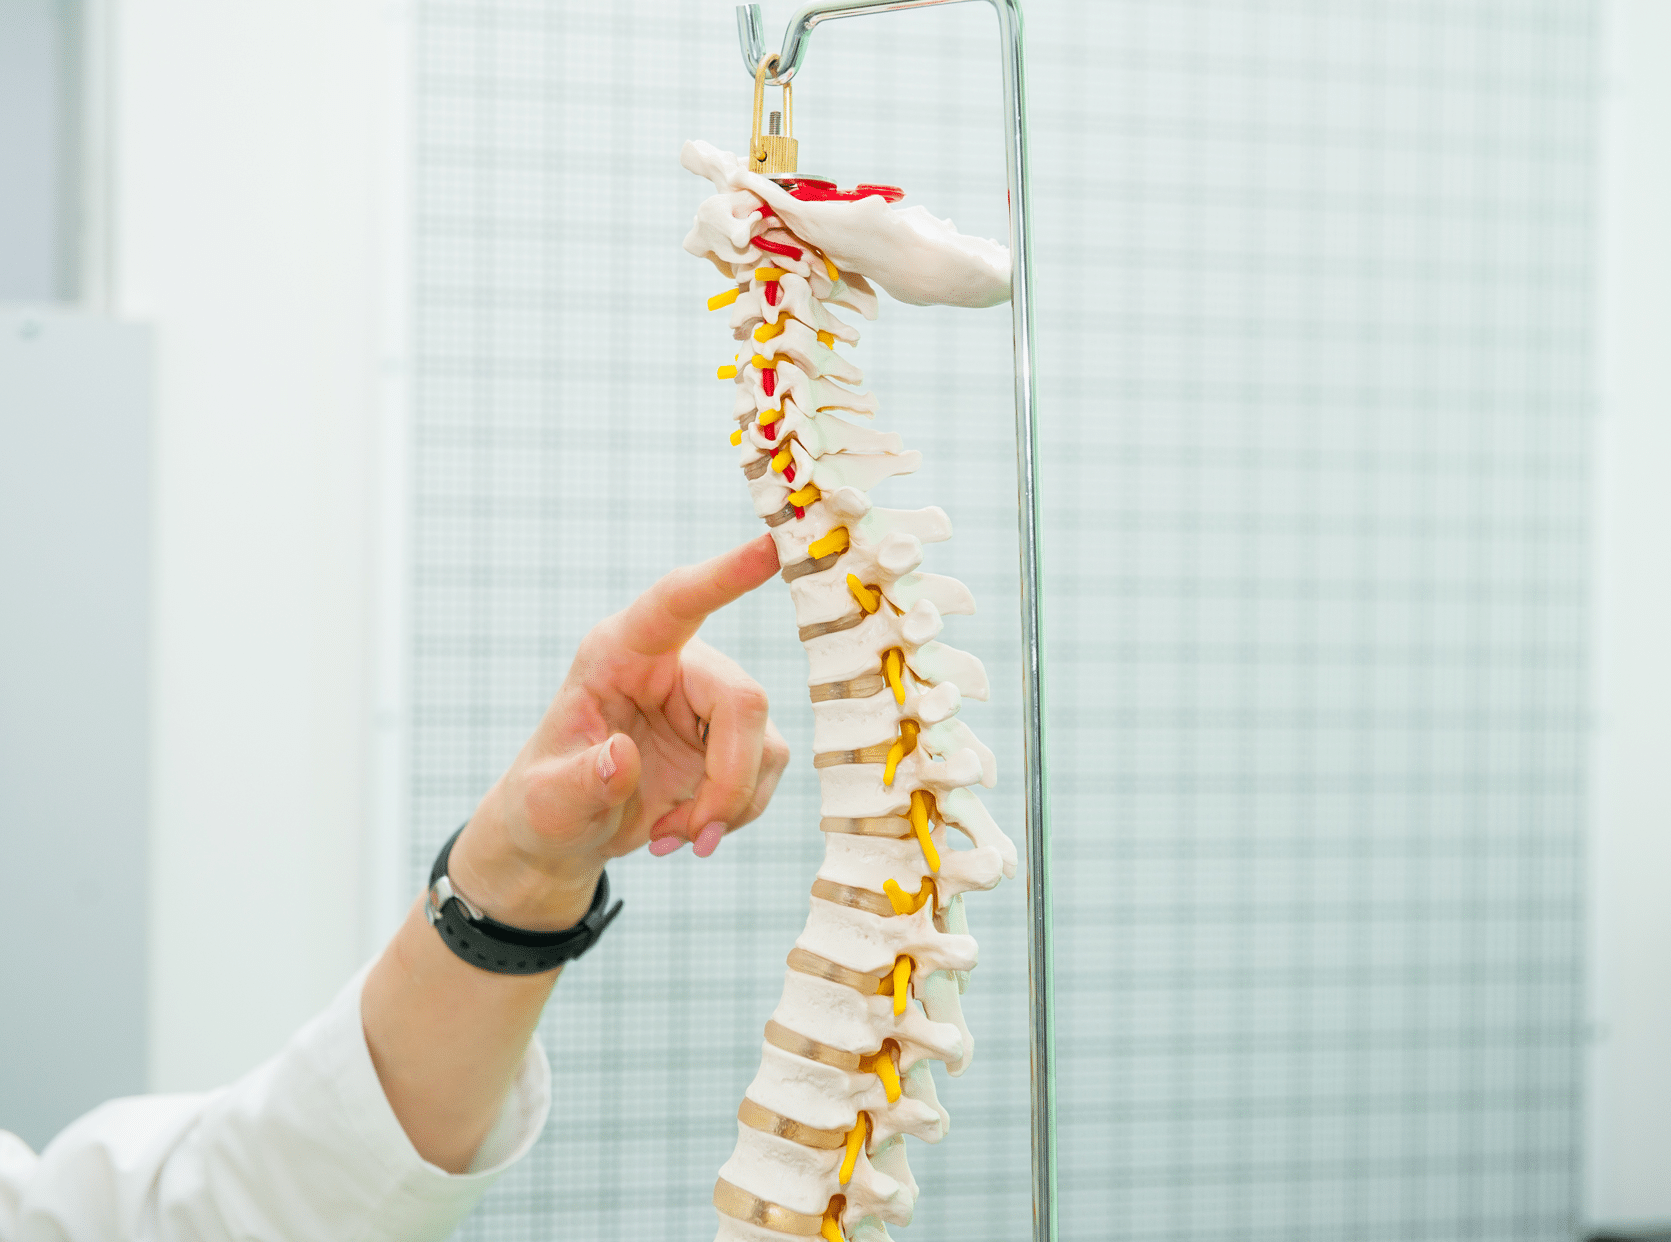 spinal cord damage